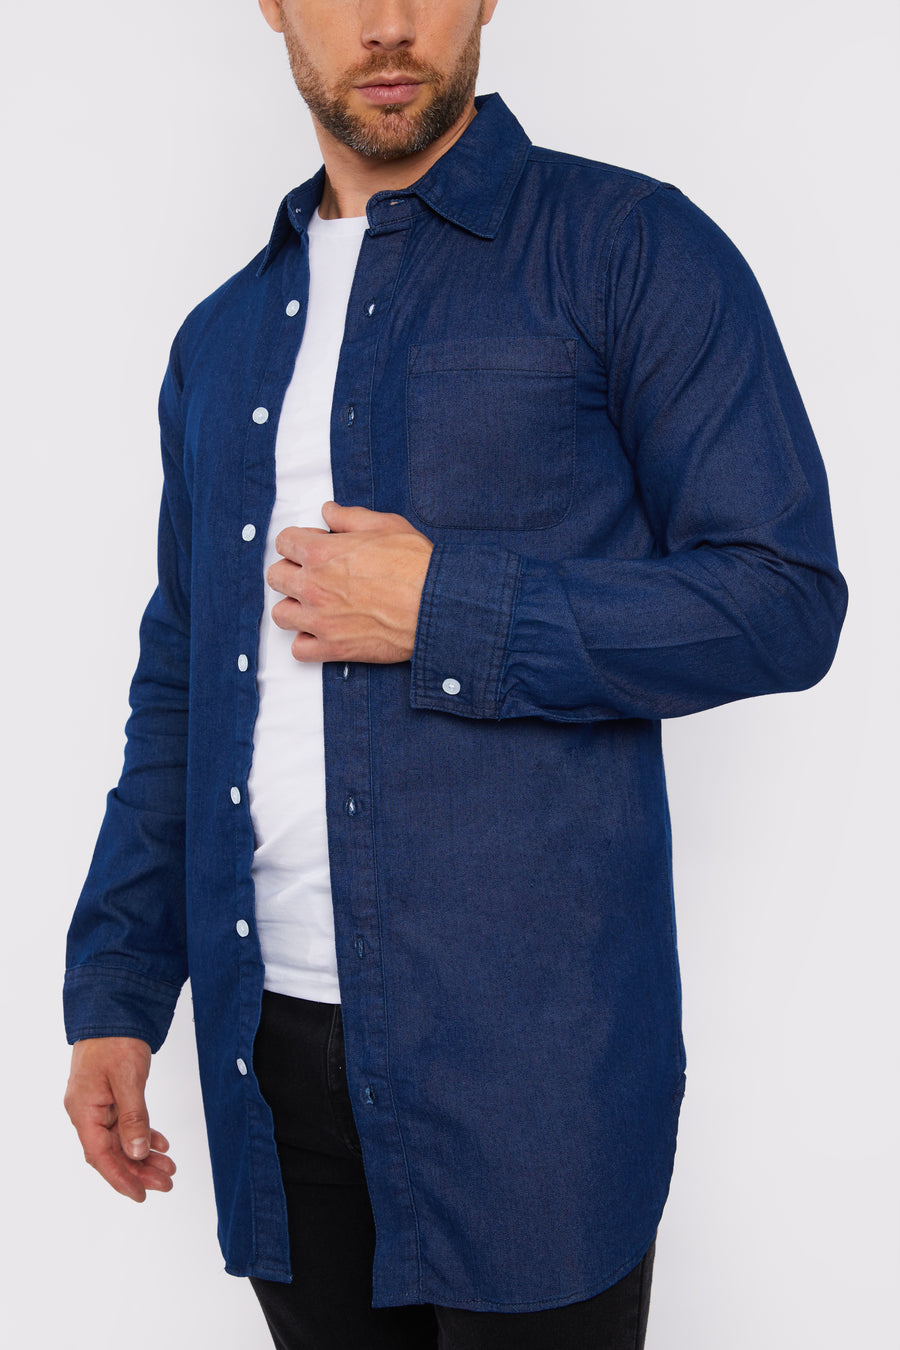 Close up product detail shot of a standing male model wearing a JMOJO Dark Blue Slim Fit Longline Denim Shirt